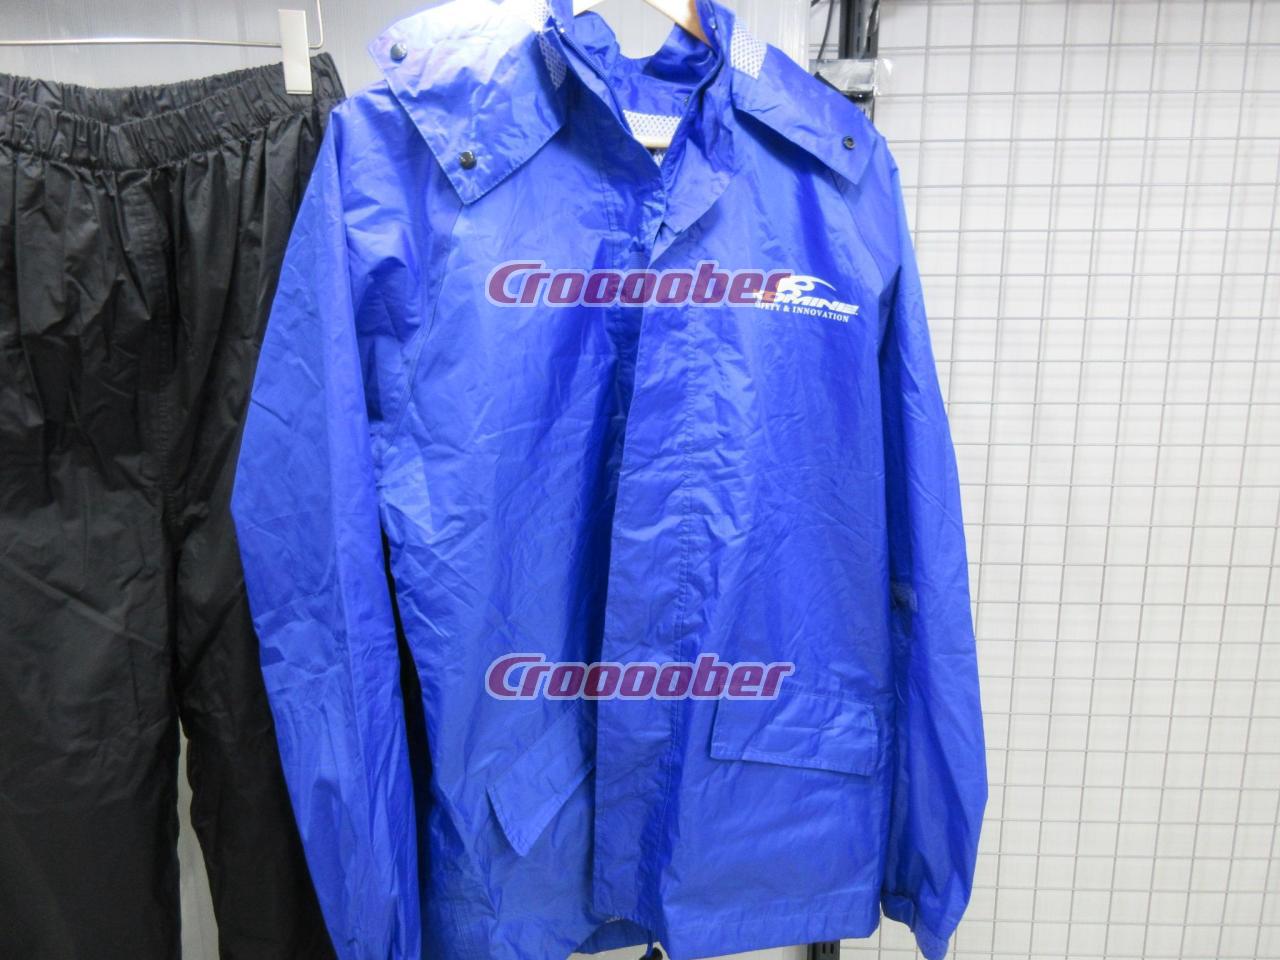 [KOMINE] バイク用 ブレスターレインウェアフィアート RK-539 755 雨具 カッパ 防水 03-539 メンズ Blue Camo S